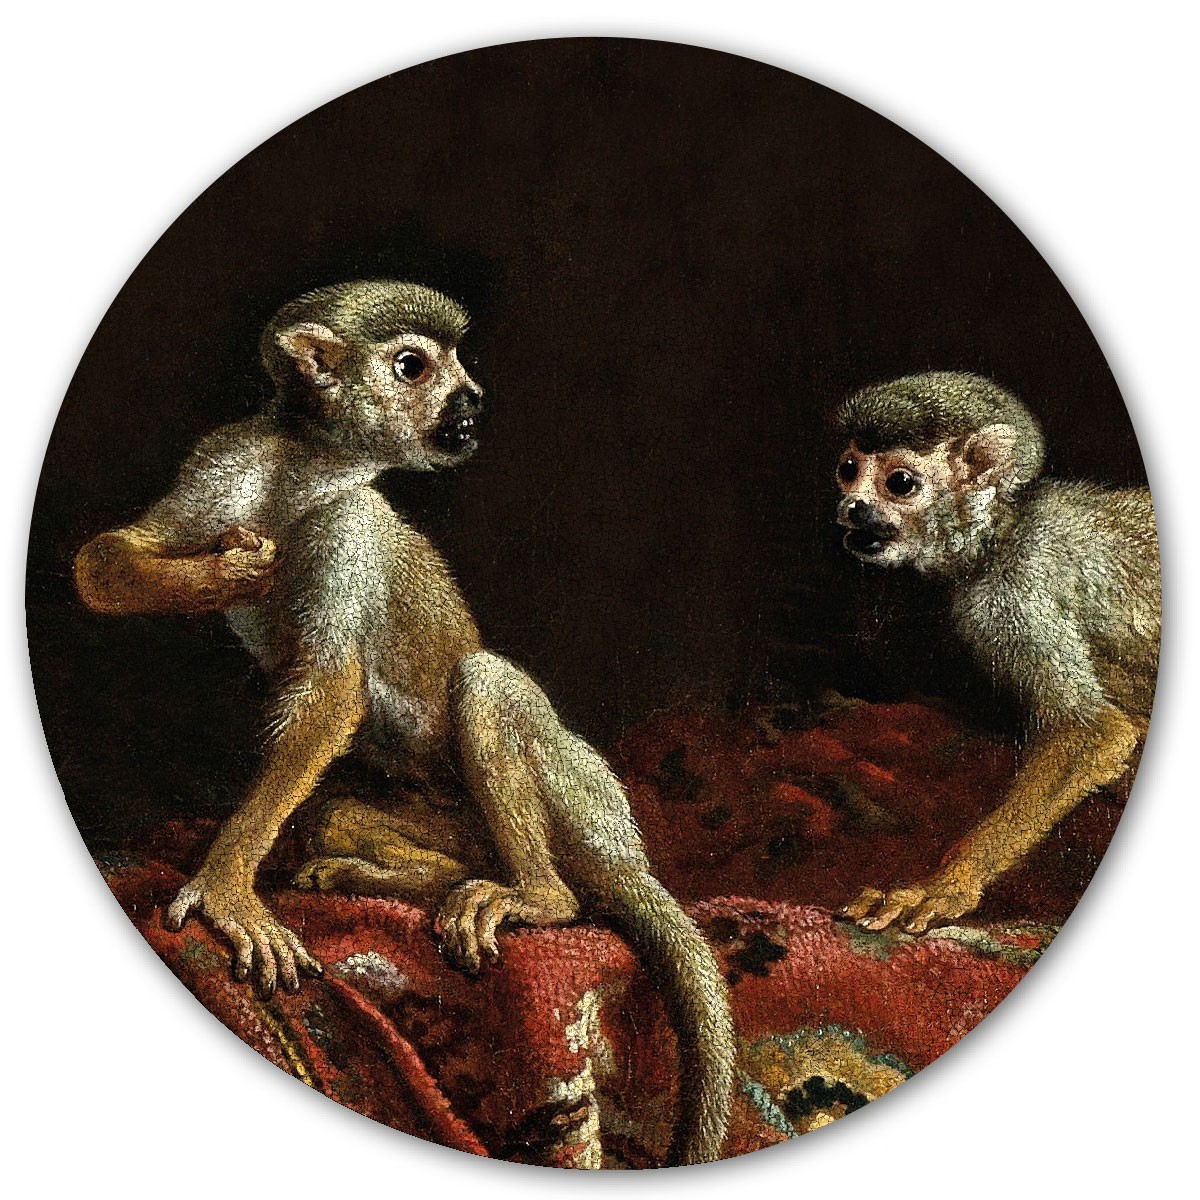 Sticker magnetic, Two little monkeys, 60cm GroovyMagnets